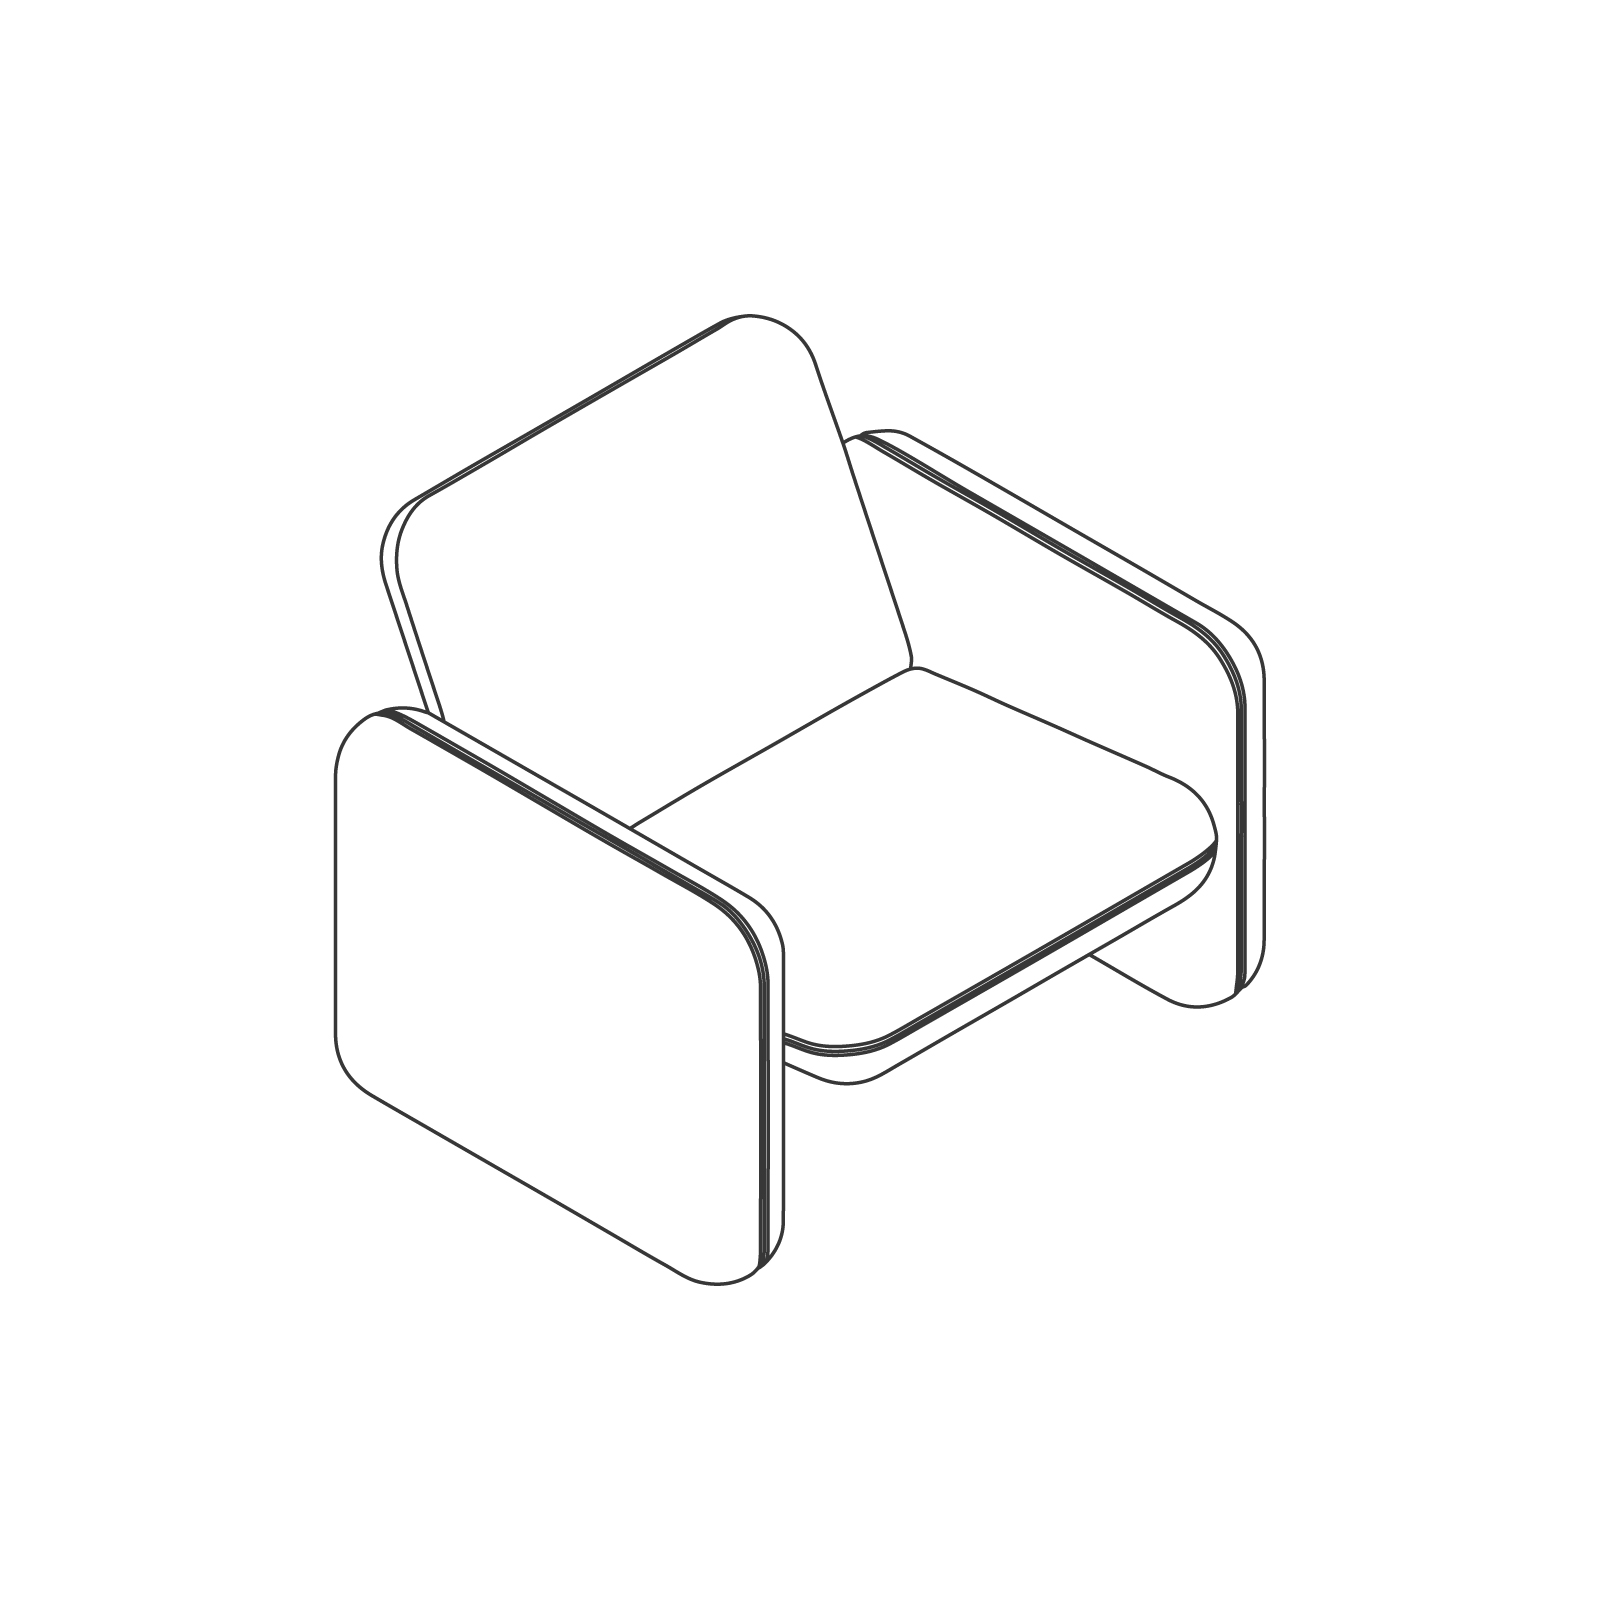 A line drawing – Wilkes Modular Sofa Group – Chair